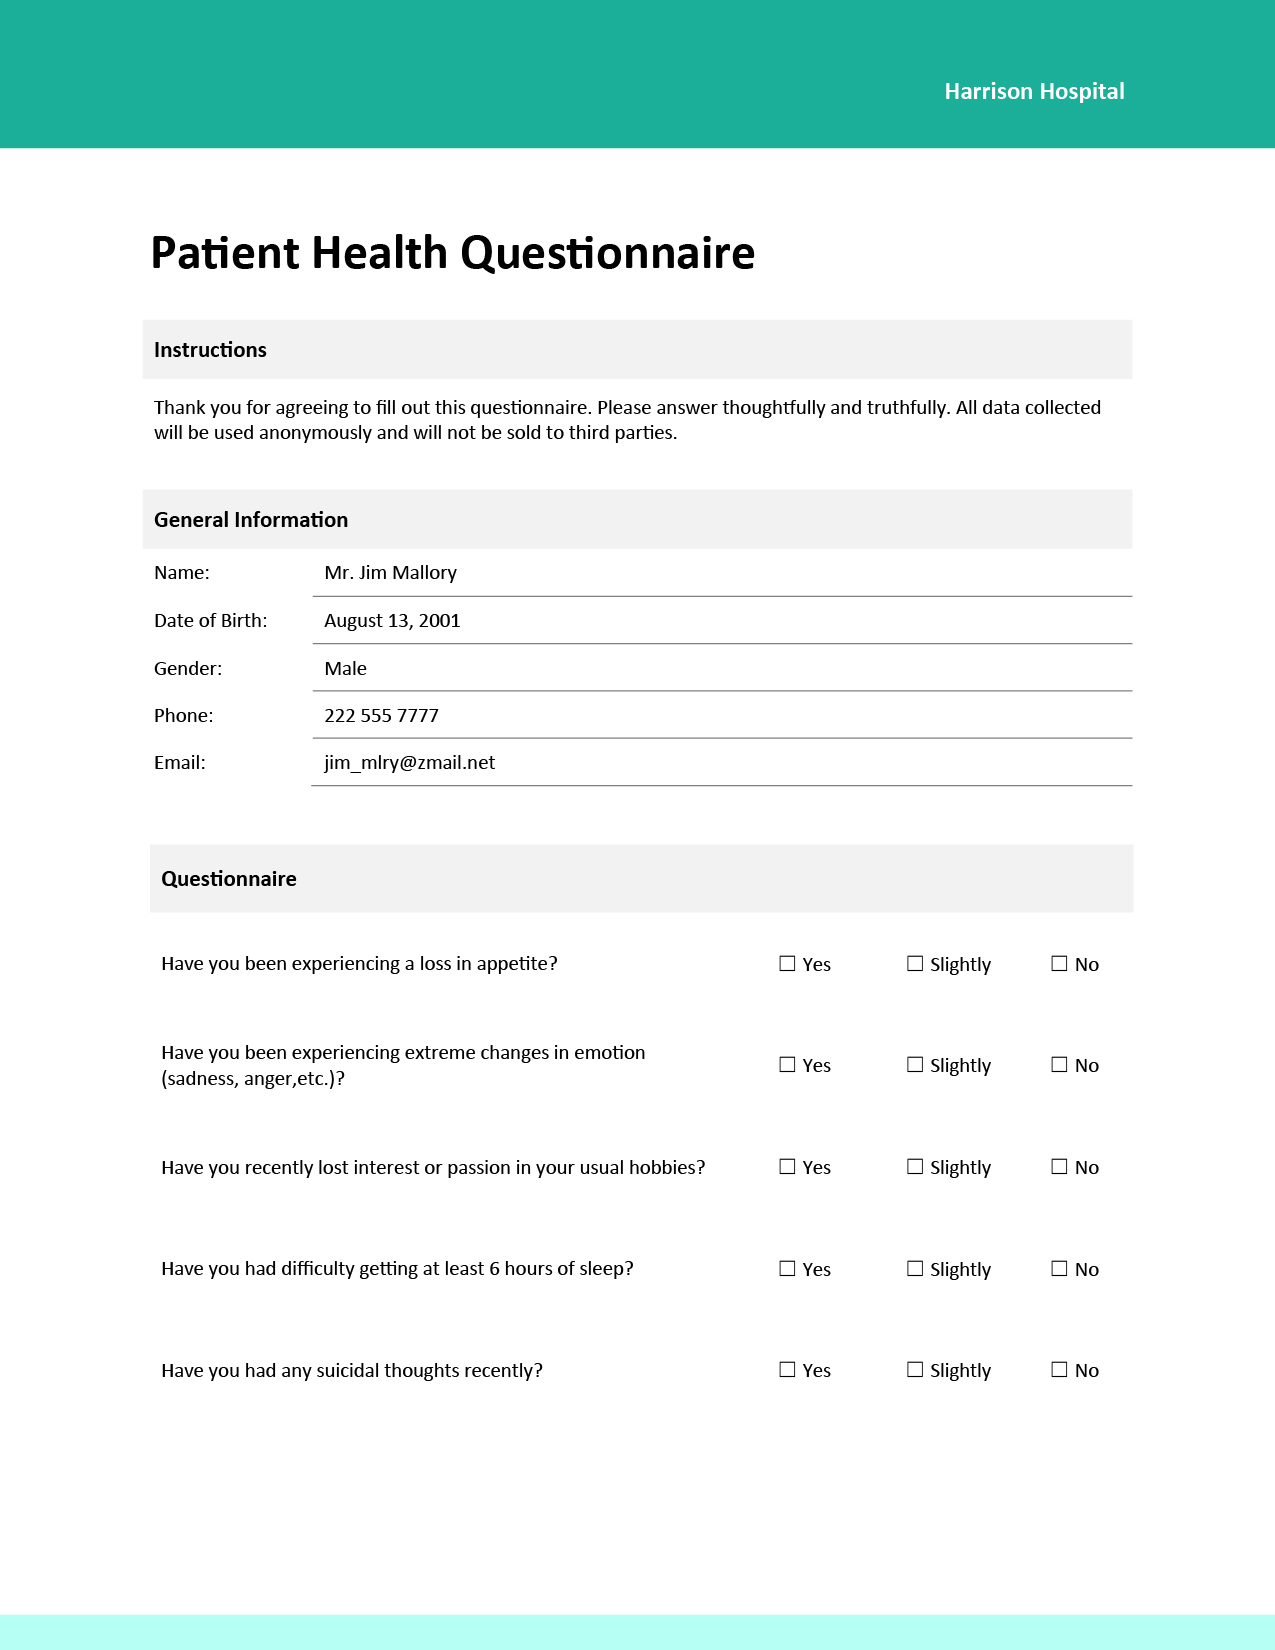 Health Questionnaire Template